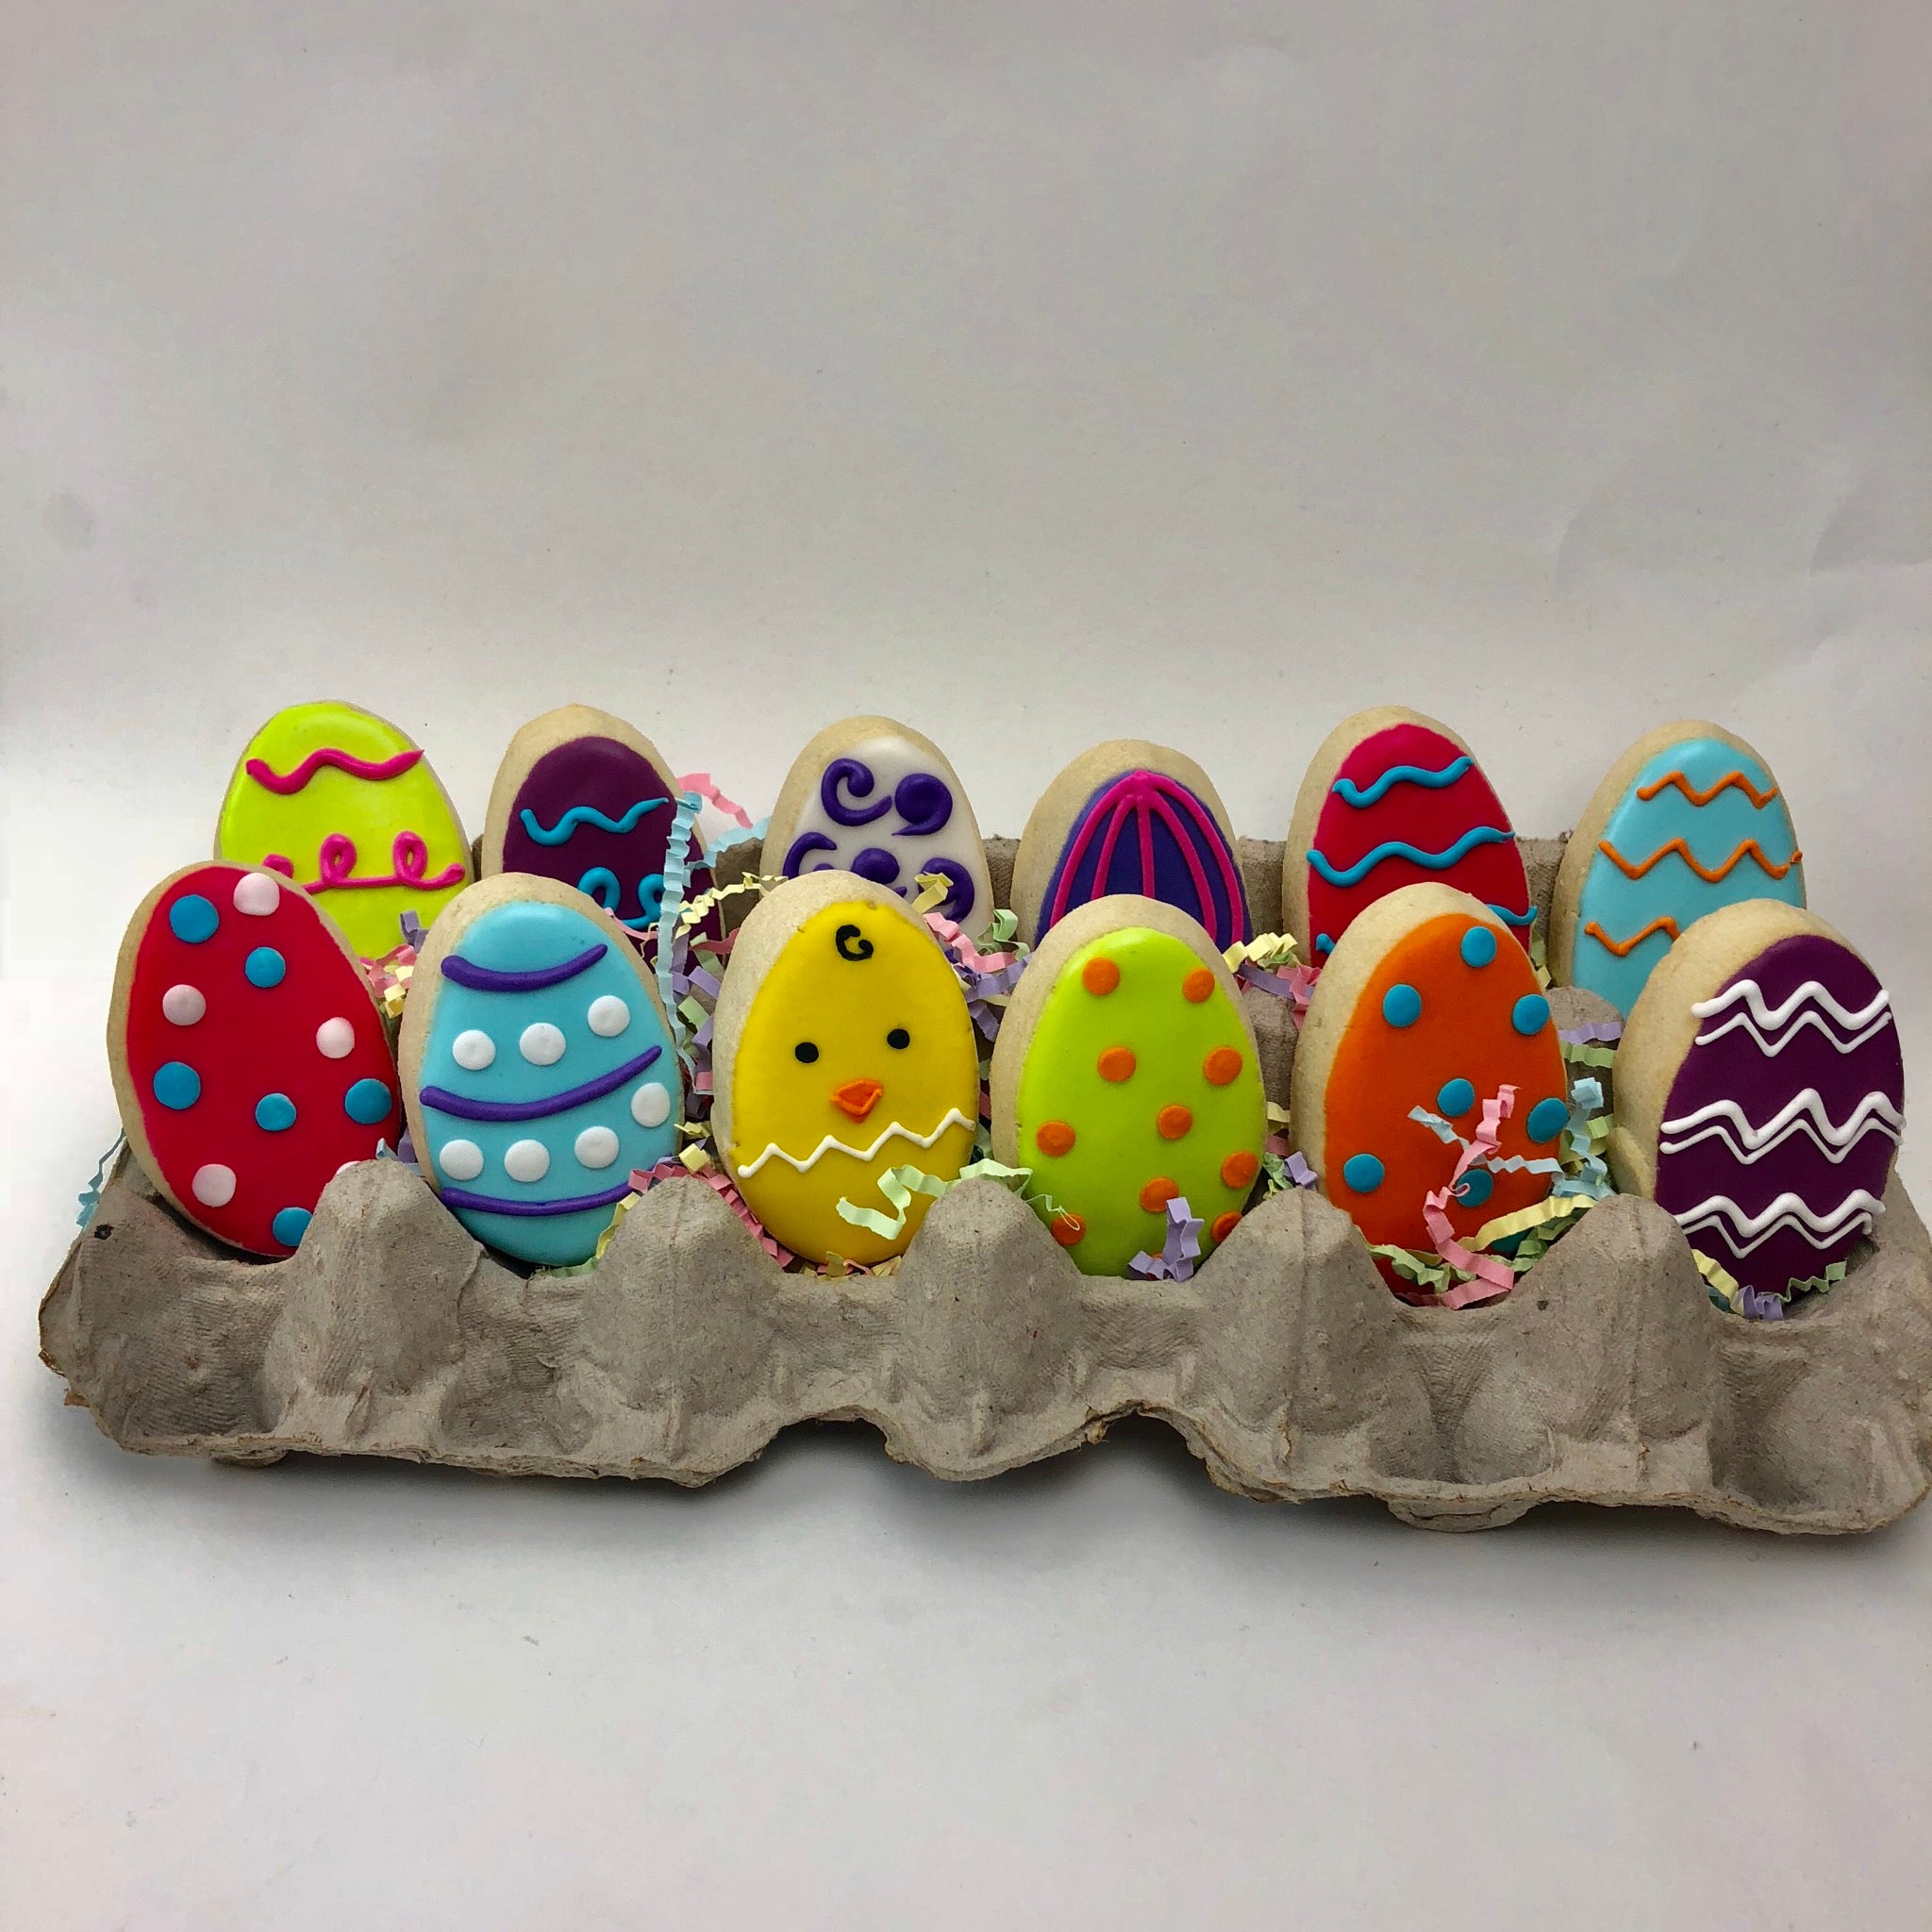 A dozen decorated Easter Egg Cookies in a carton